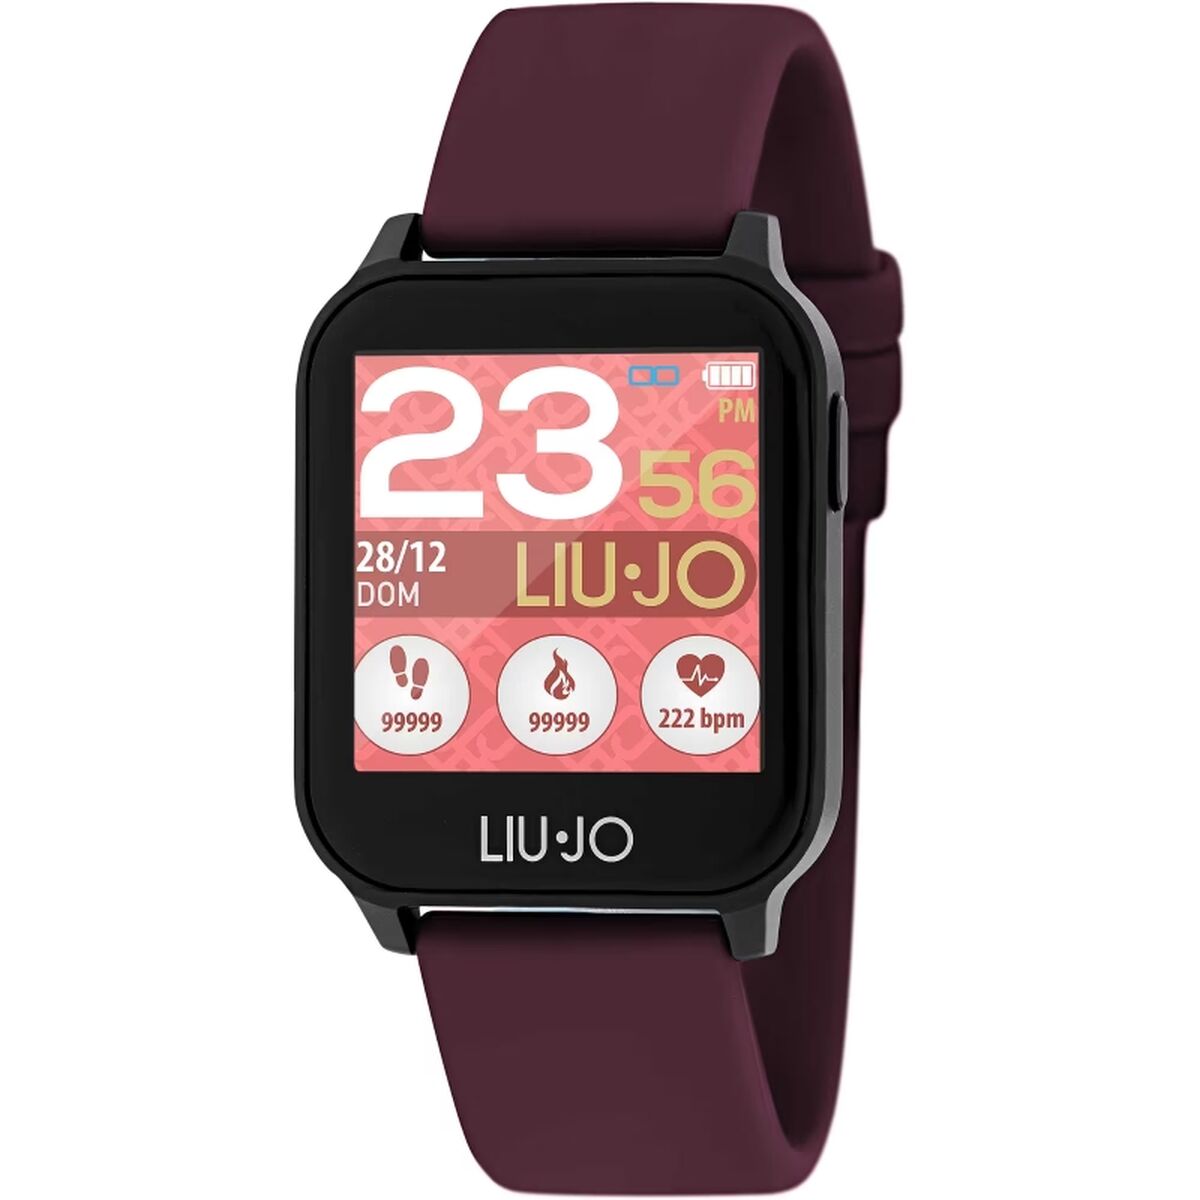 Kaufe Smartwatch LIU JO SWLJ006 bei AWK Flagship um € 123.00